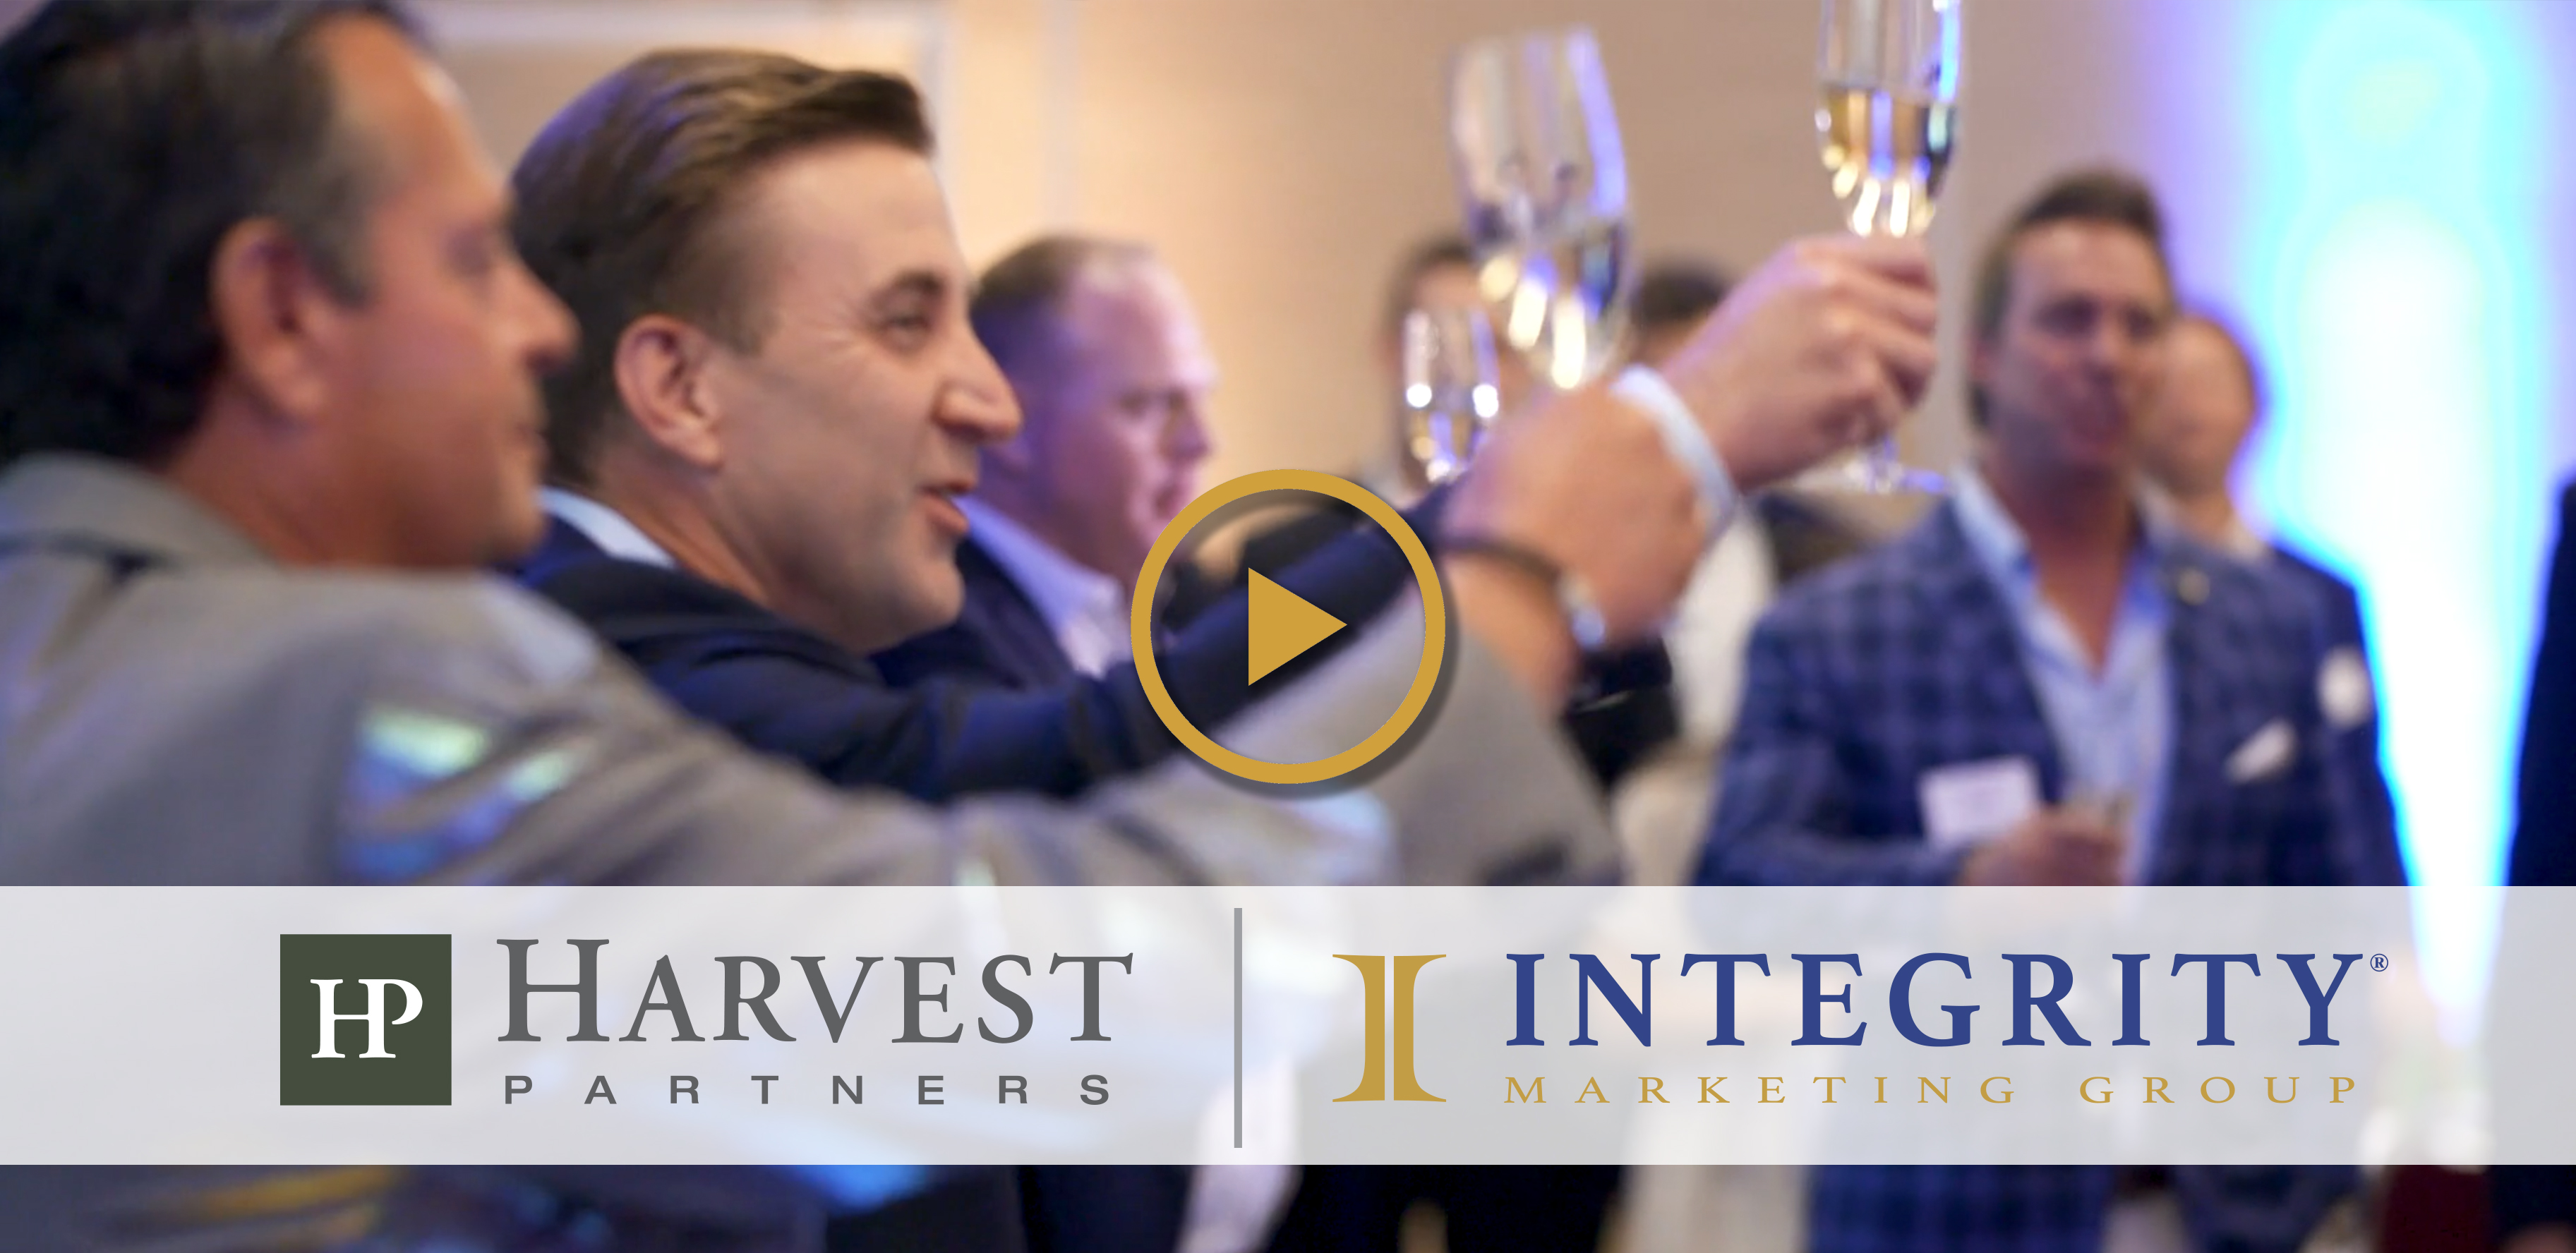 Integrity_PR-HarvestPartners-HubSpot-Hero